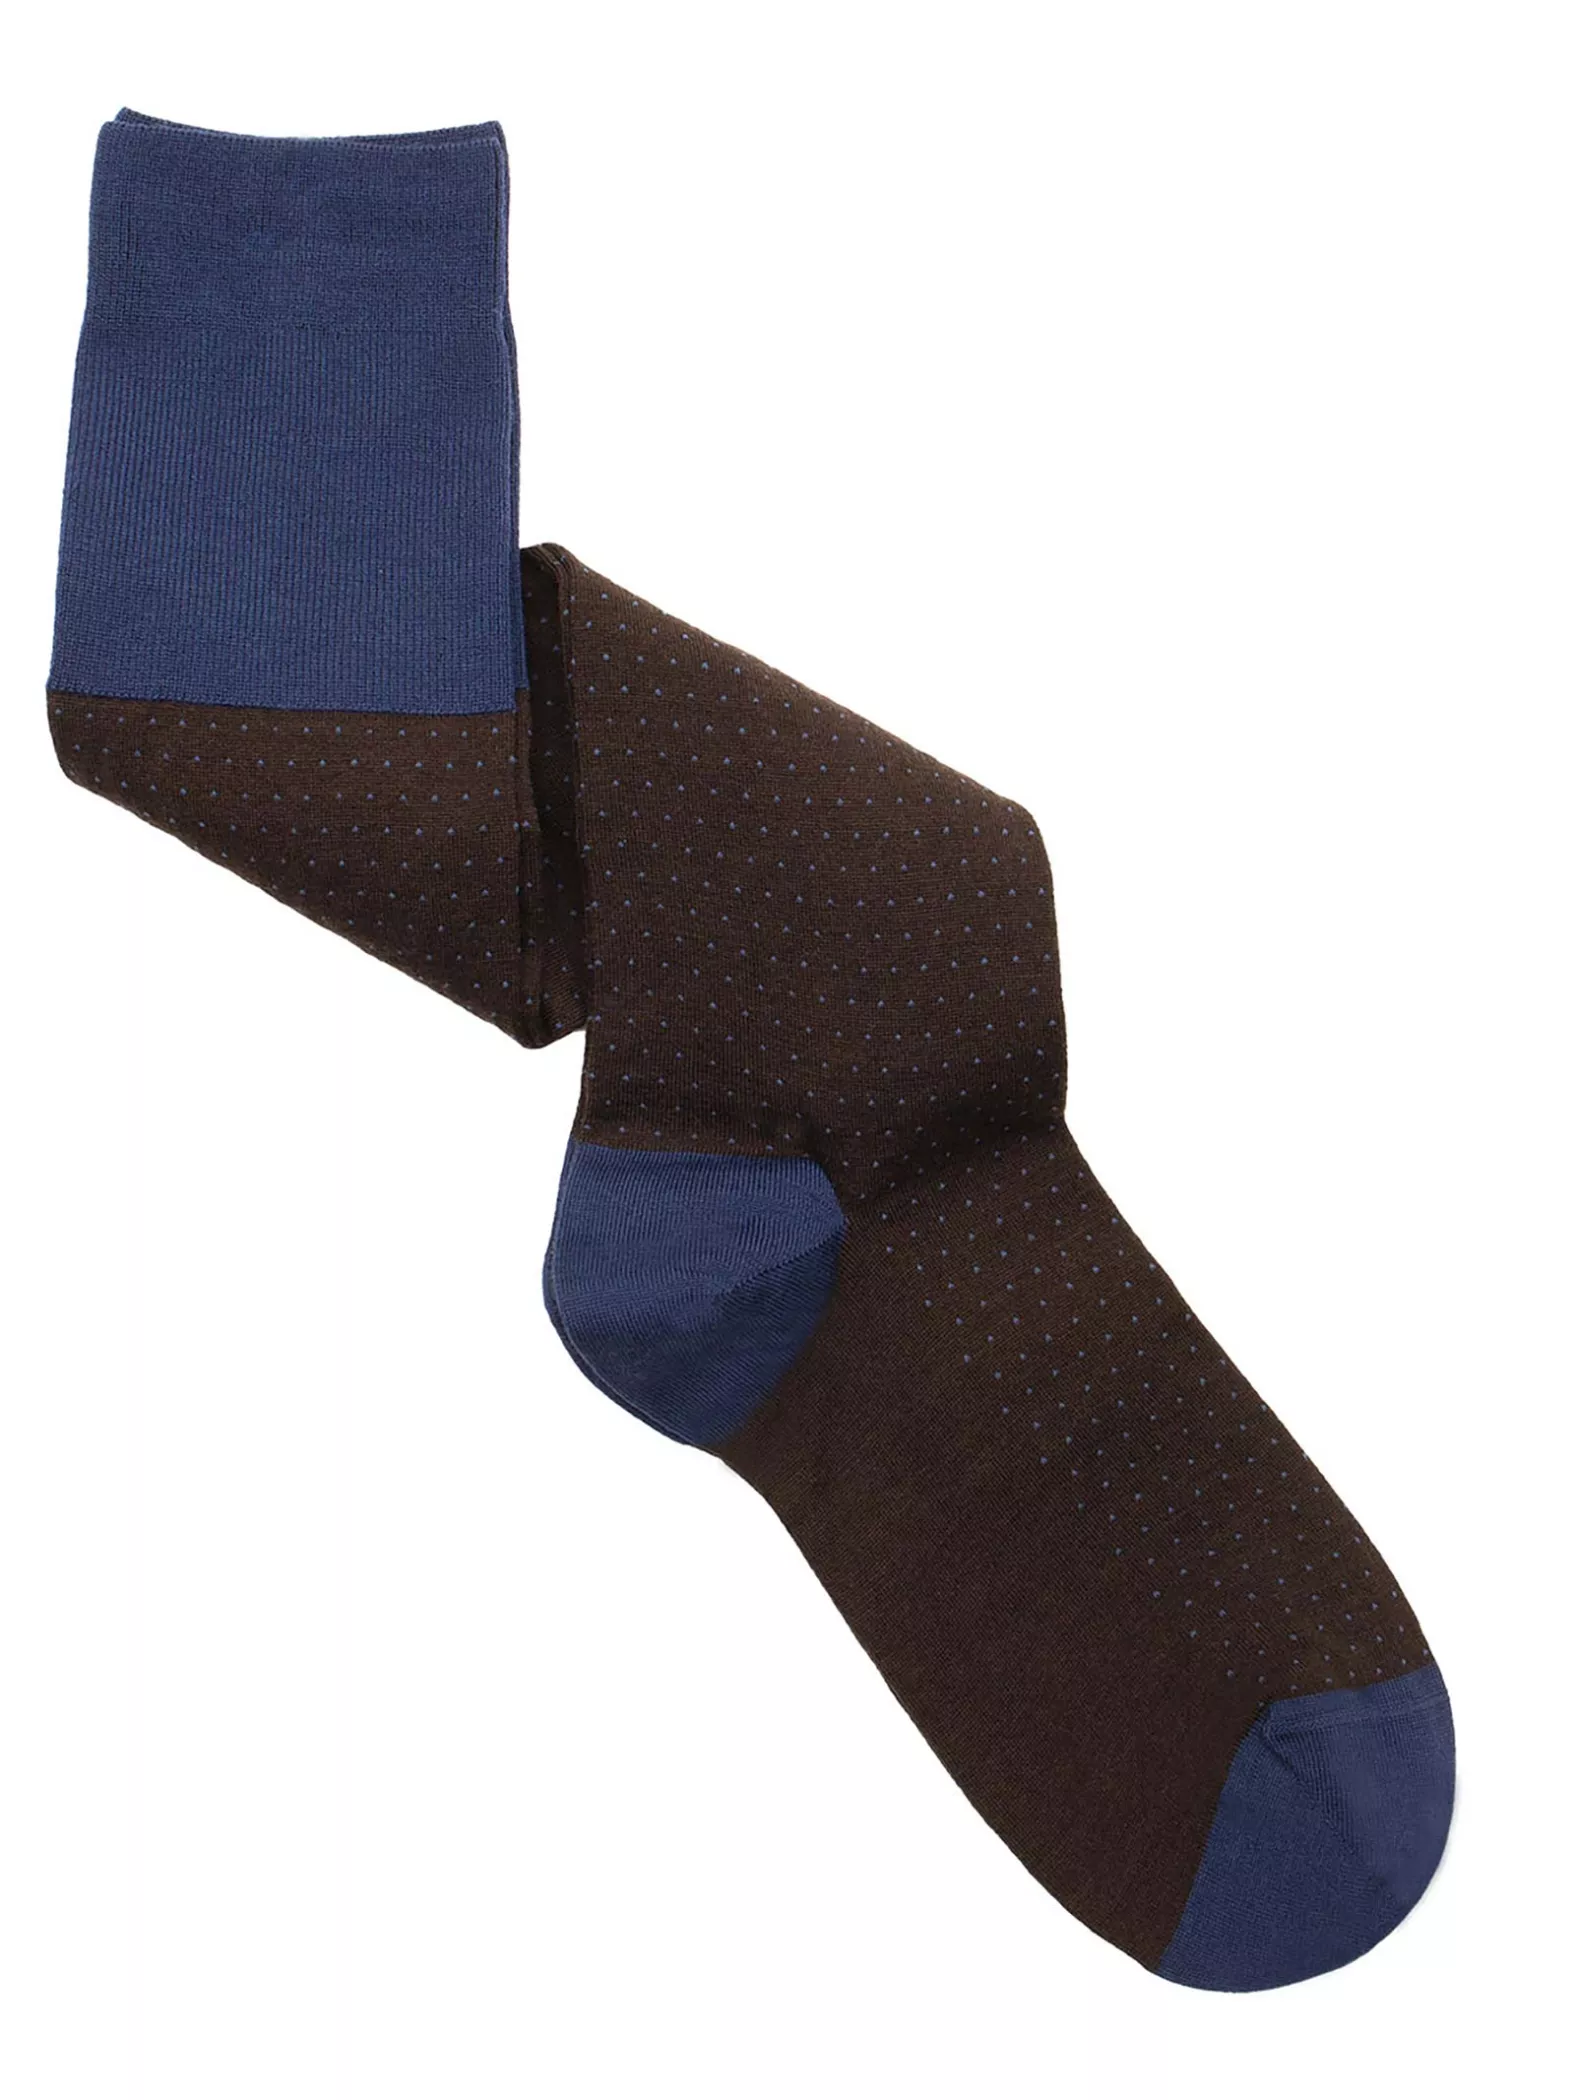 Long socks in patterned wool for men